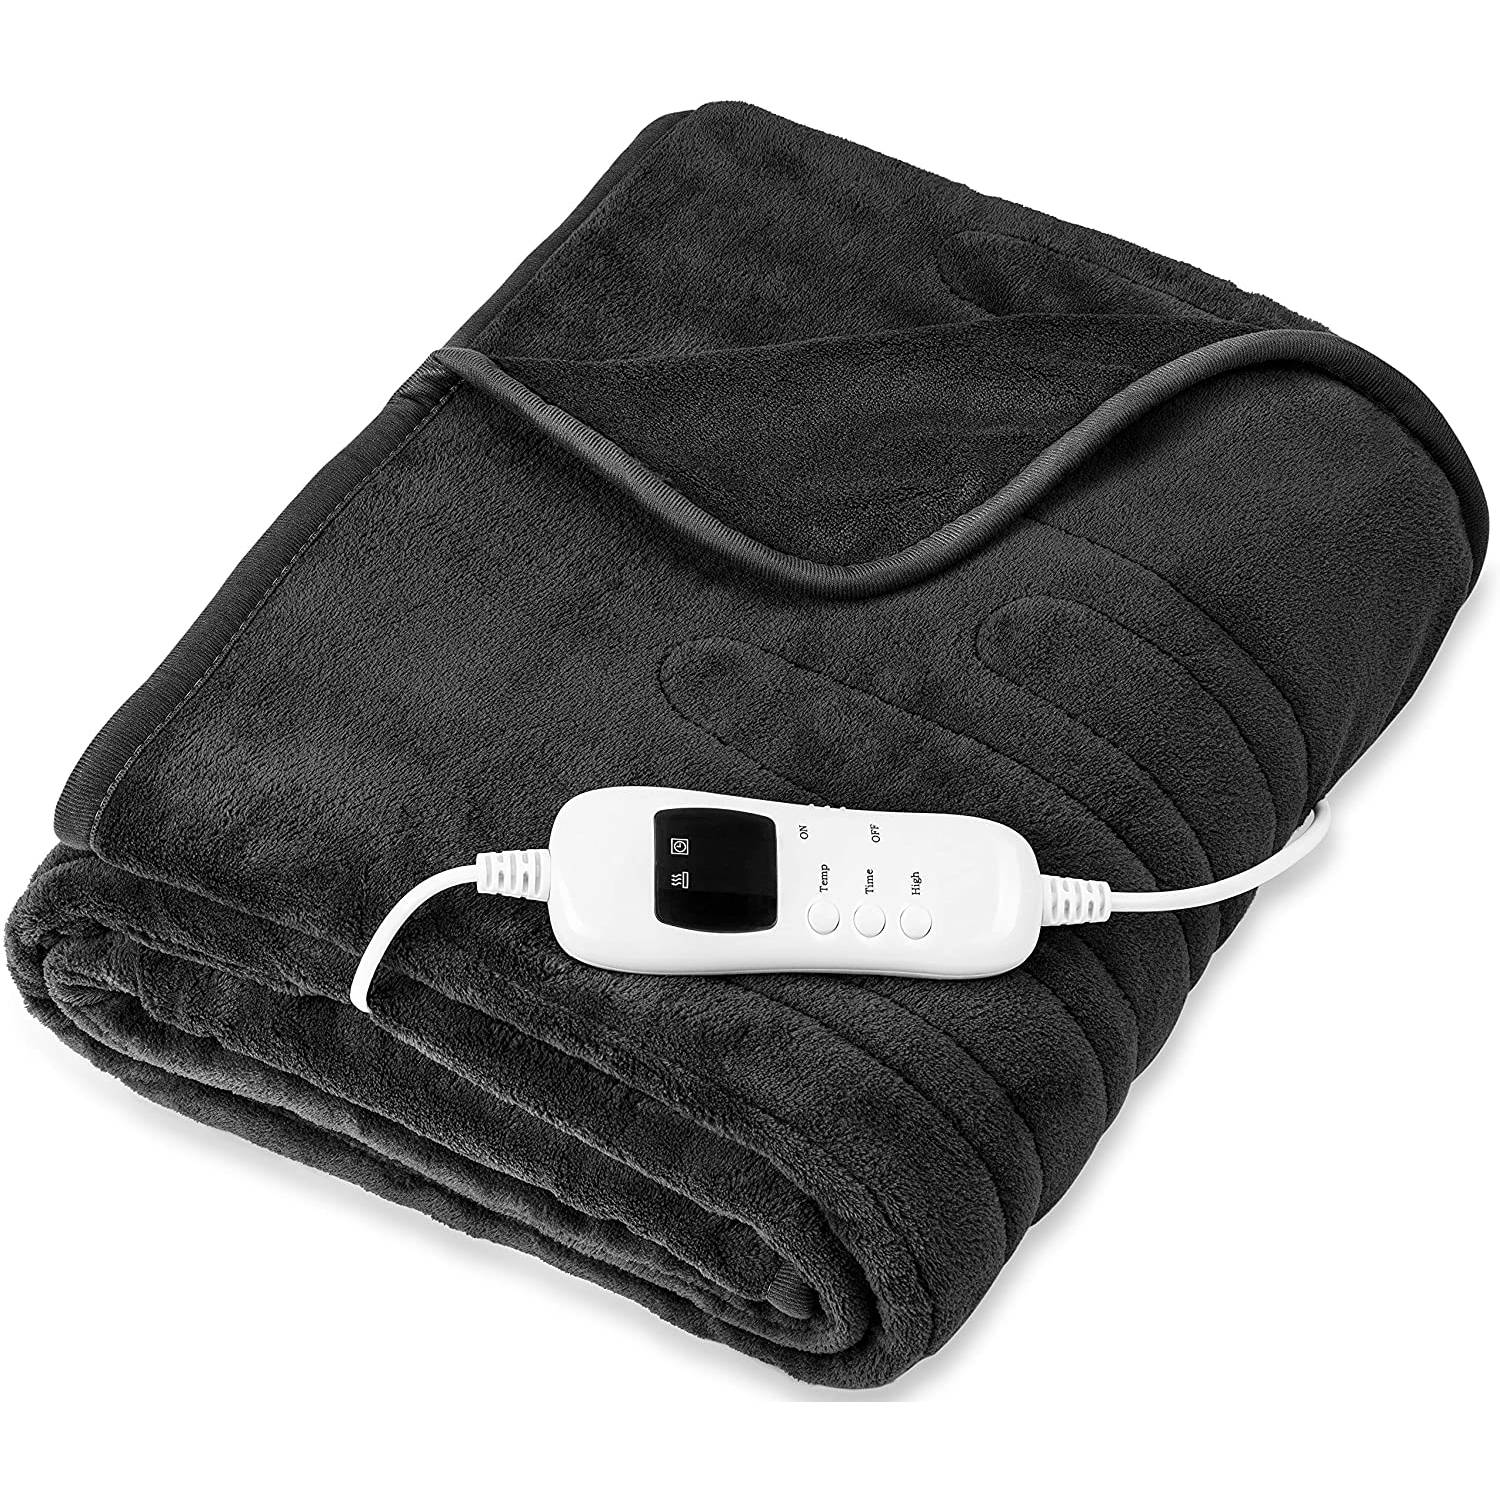 Sinnlein- Elektrische deken, antraciet, verwarmde deken, XXL verwarmingsdeken, 160 x 120 cm, automat